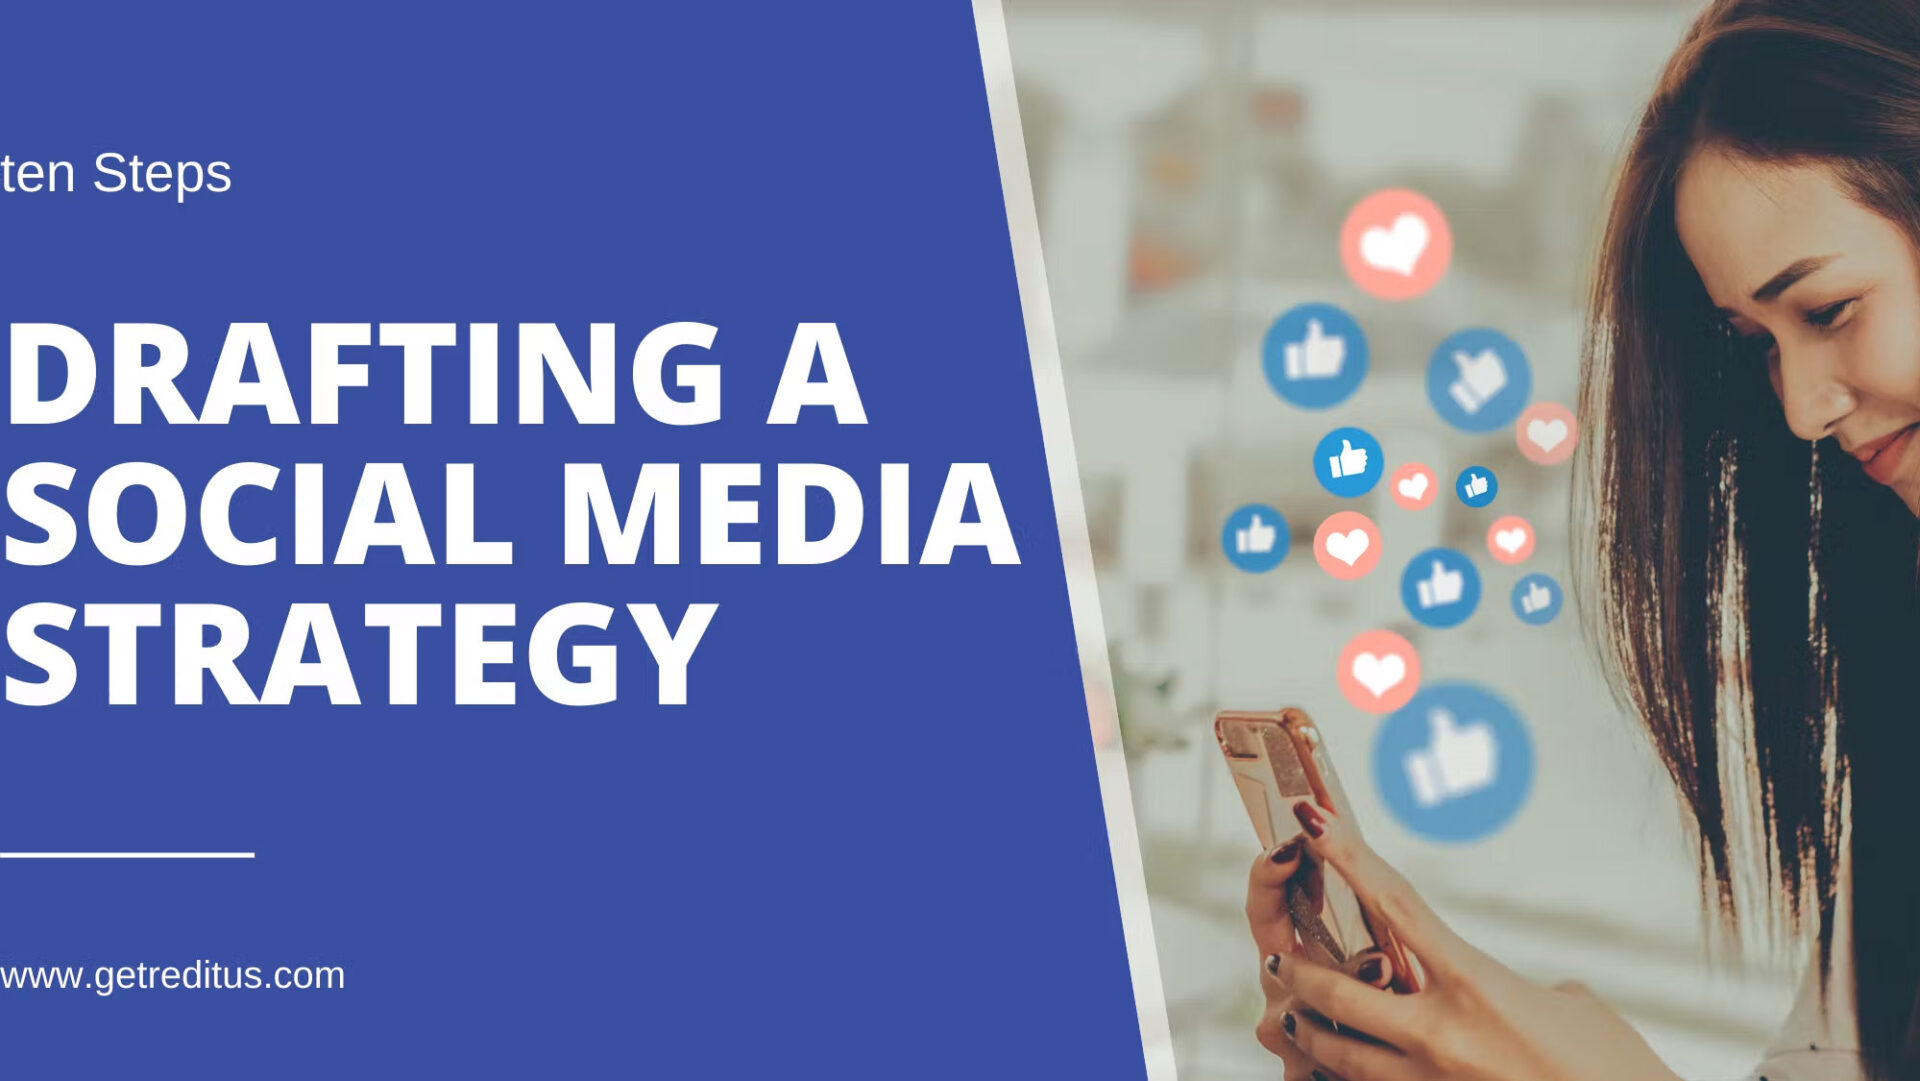 10 Steps to Drafting a Social Media Strategy